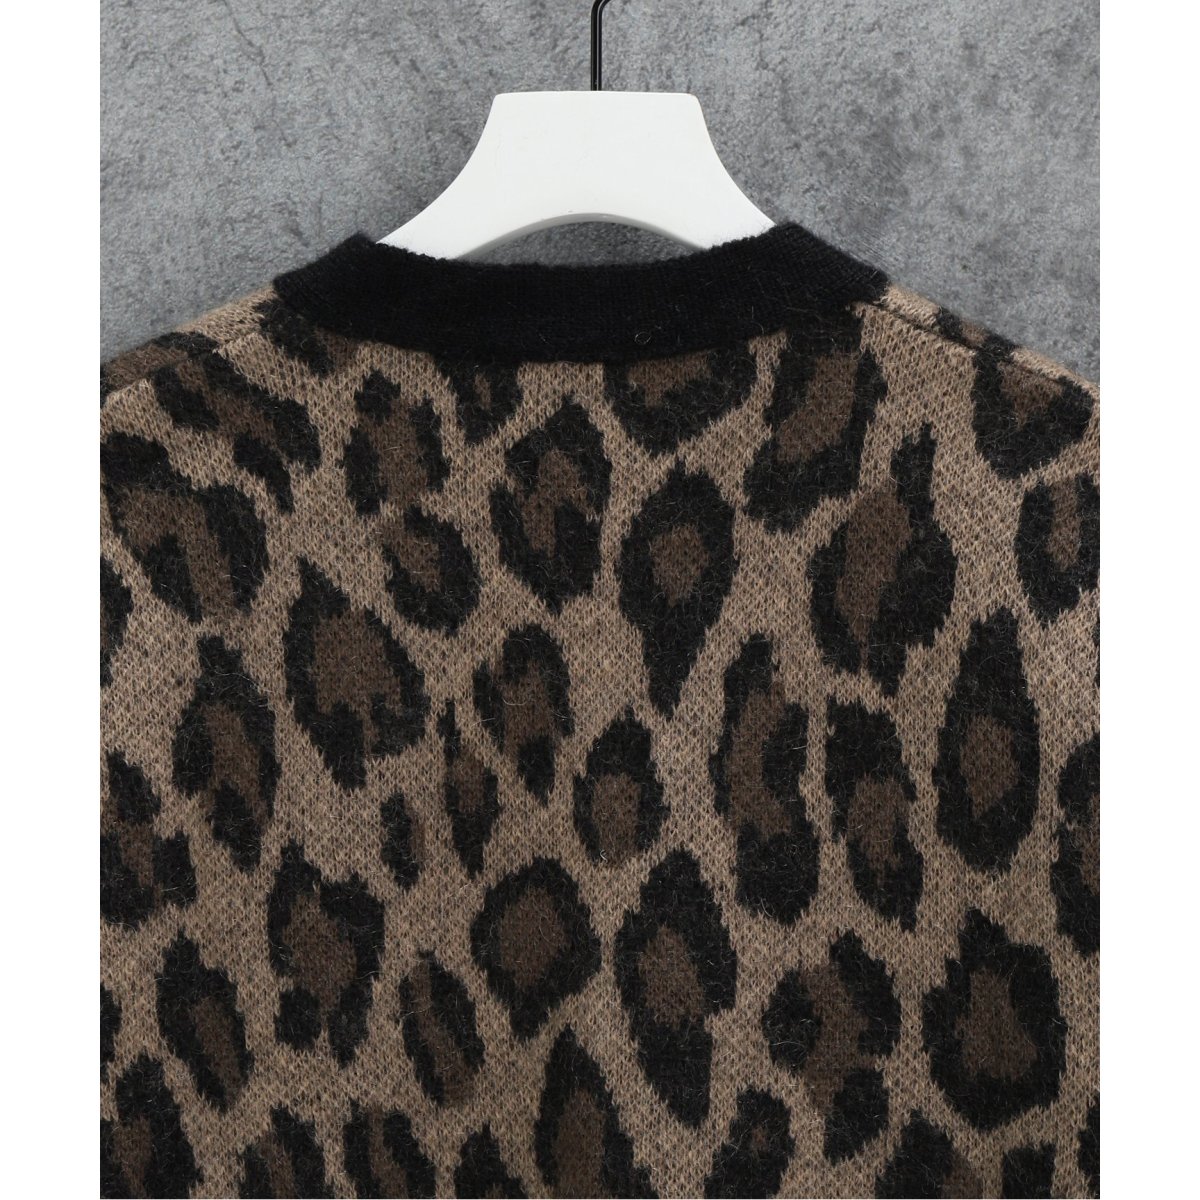 Second layer セカンドレイヤー leopard jacket speufpel.com